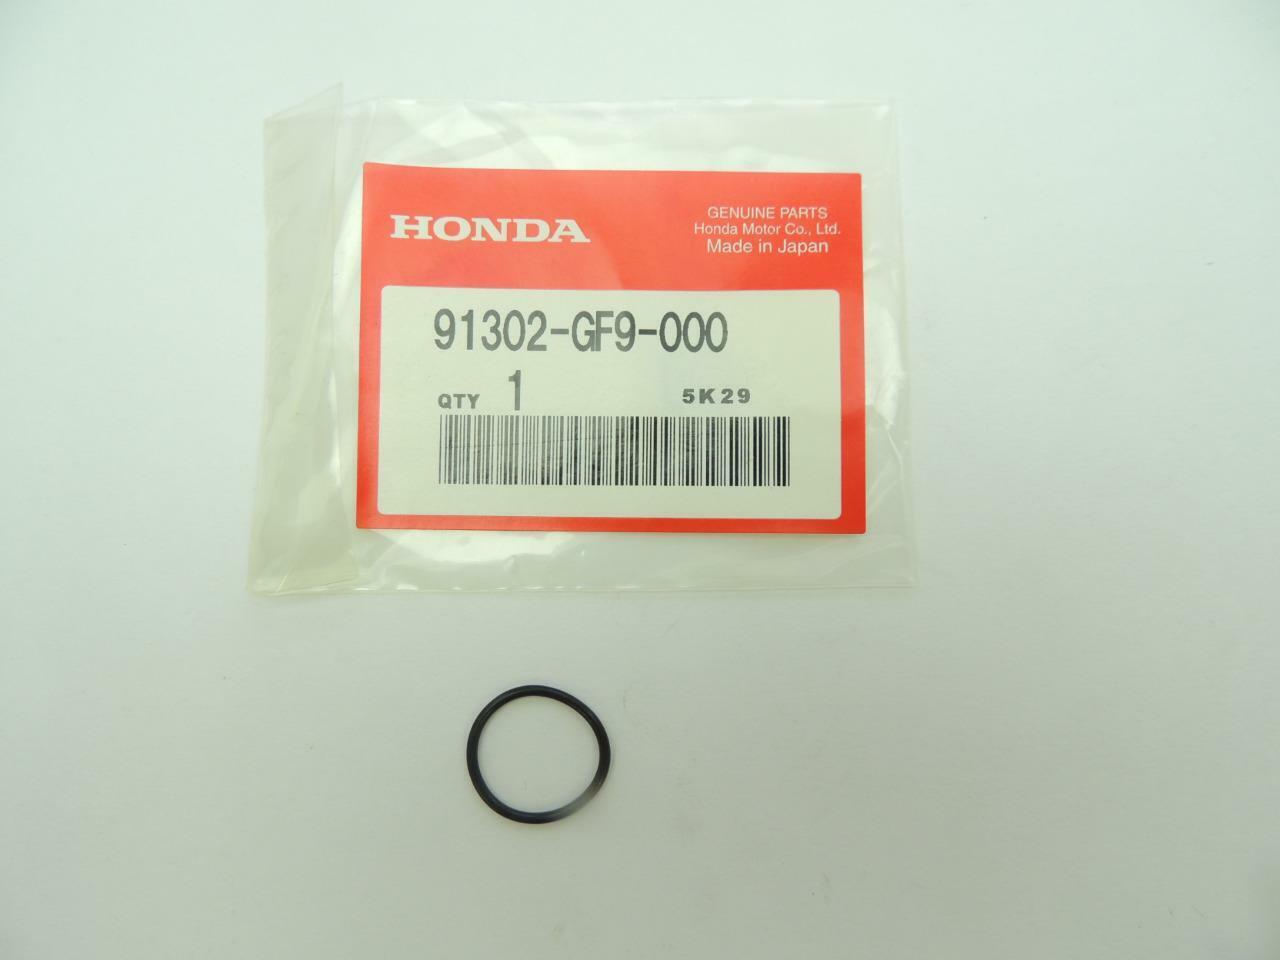 91302-GF9-000 NOS Honda O-Ring 16x1.5 P50 TRX400FW Fourman Y214p